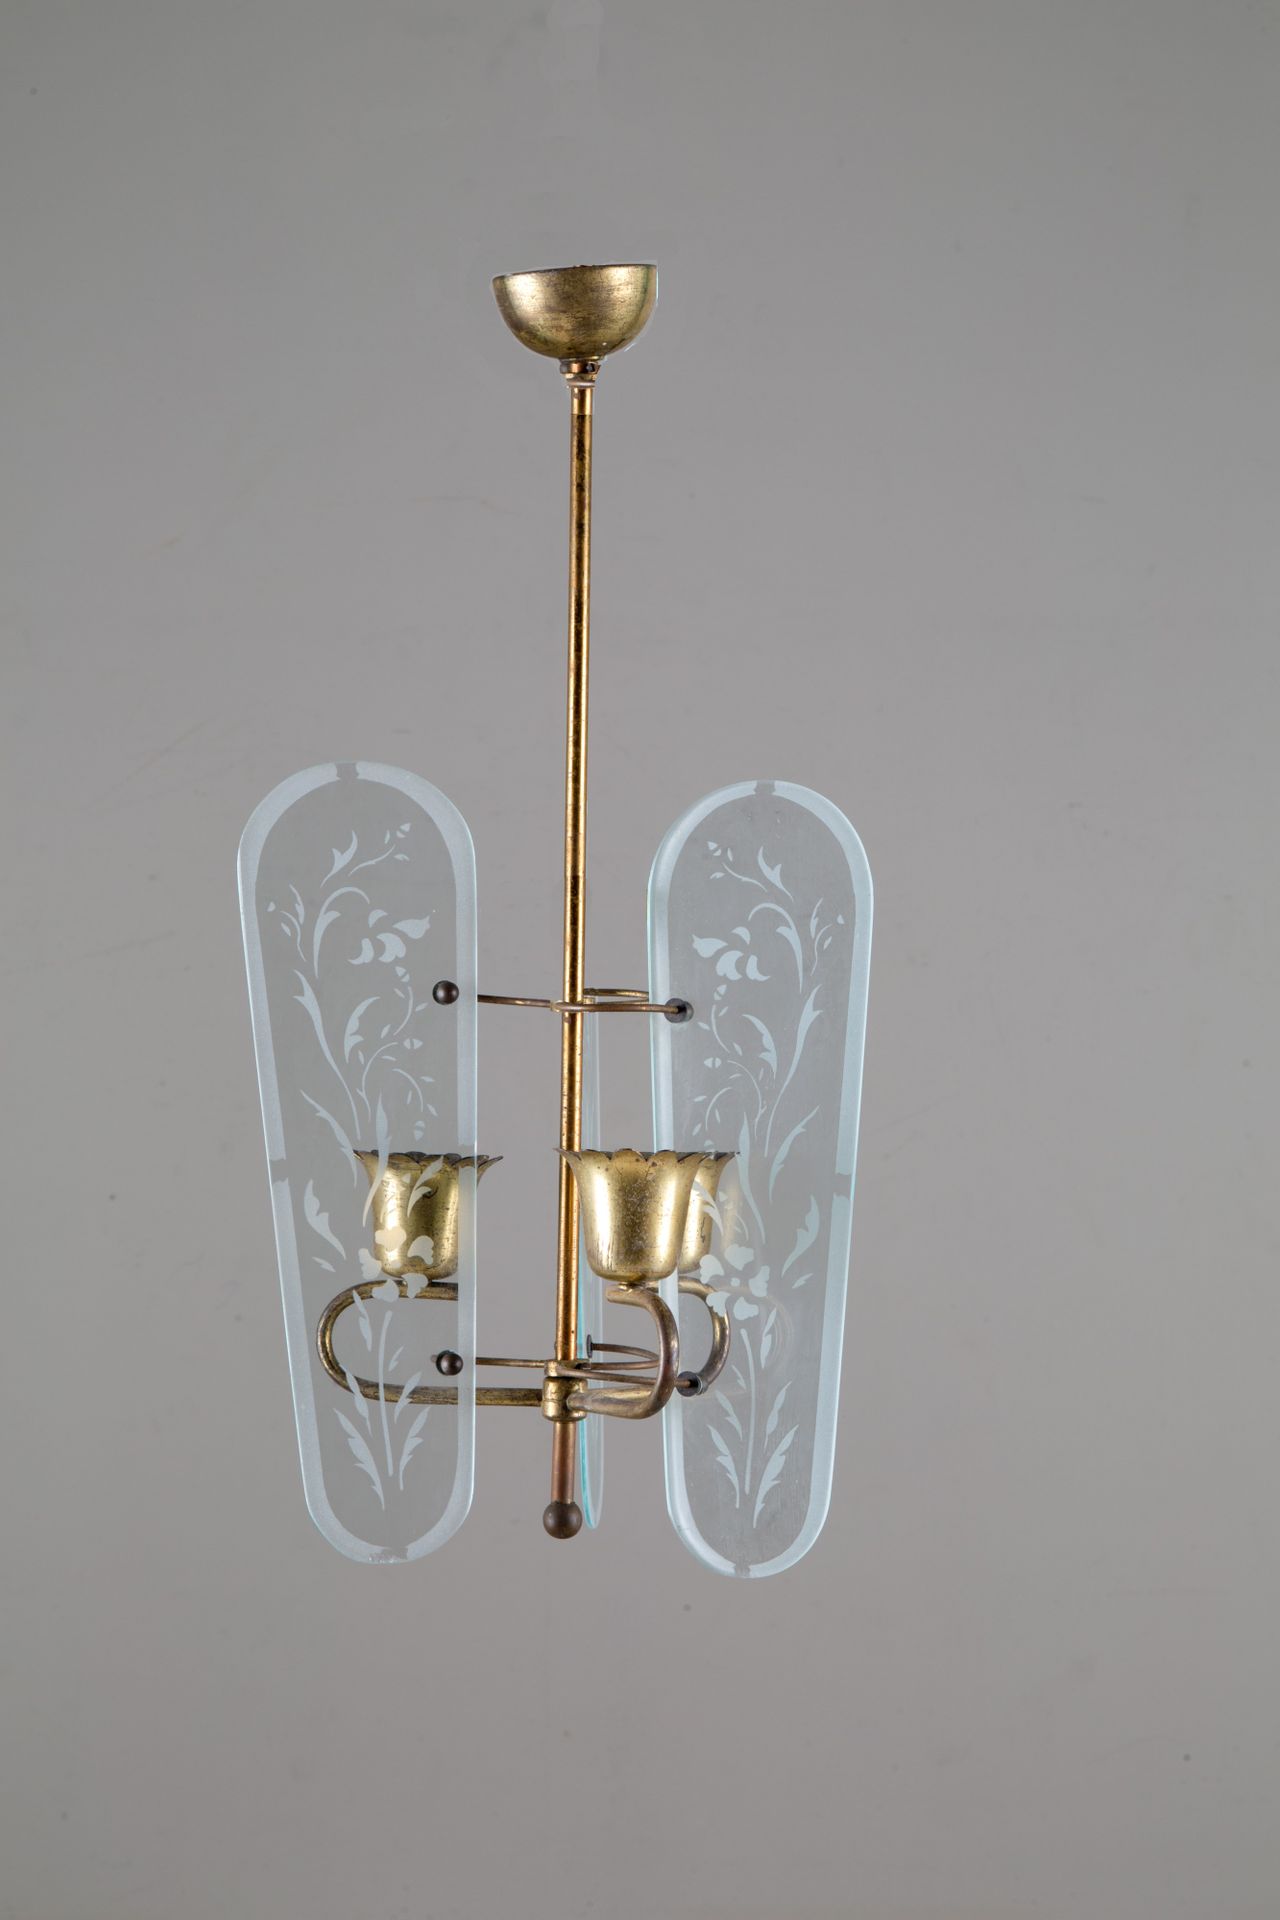 Three light chandelier 三灯黄铜吊灯，酸蚀玻璃。1960s.有磨损痕迹。高约 50 厘米。